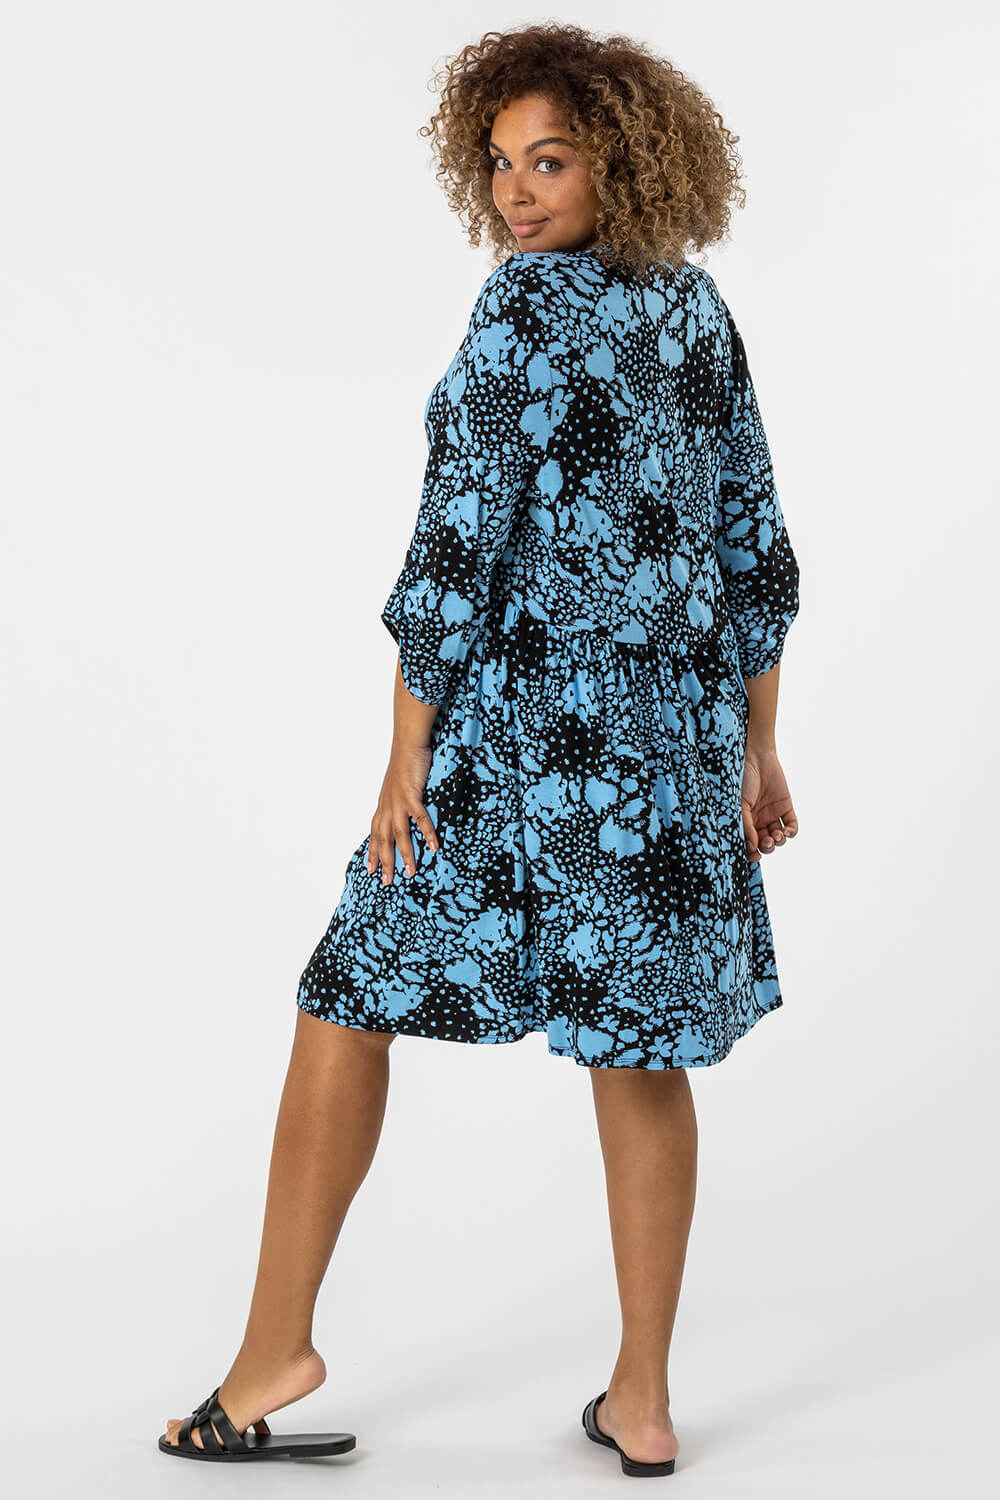 Blue Curve Floral Print Jersey Dress, Image 2 of 5